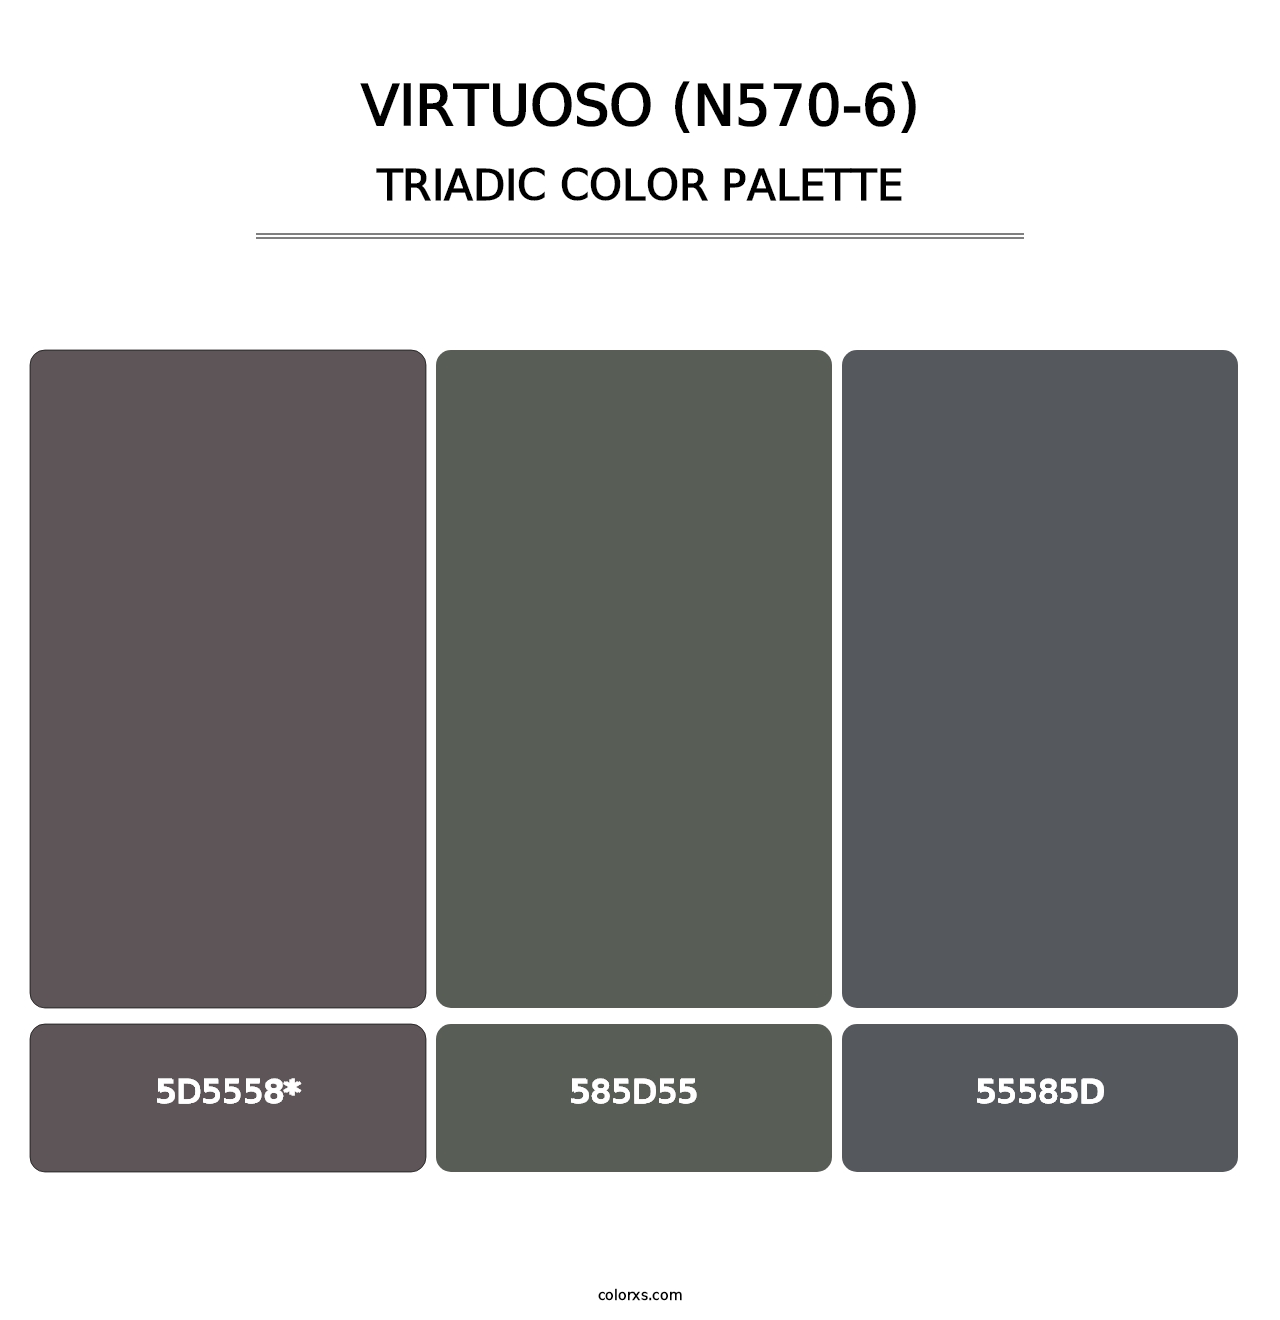 Virtuoso (N570-6) - Triadic Color Palette